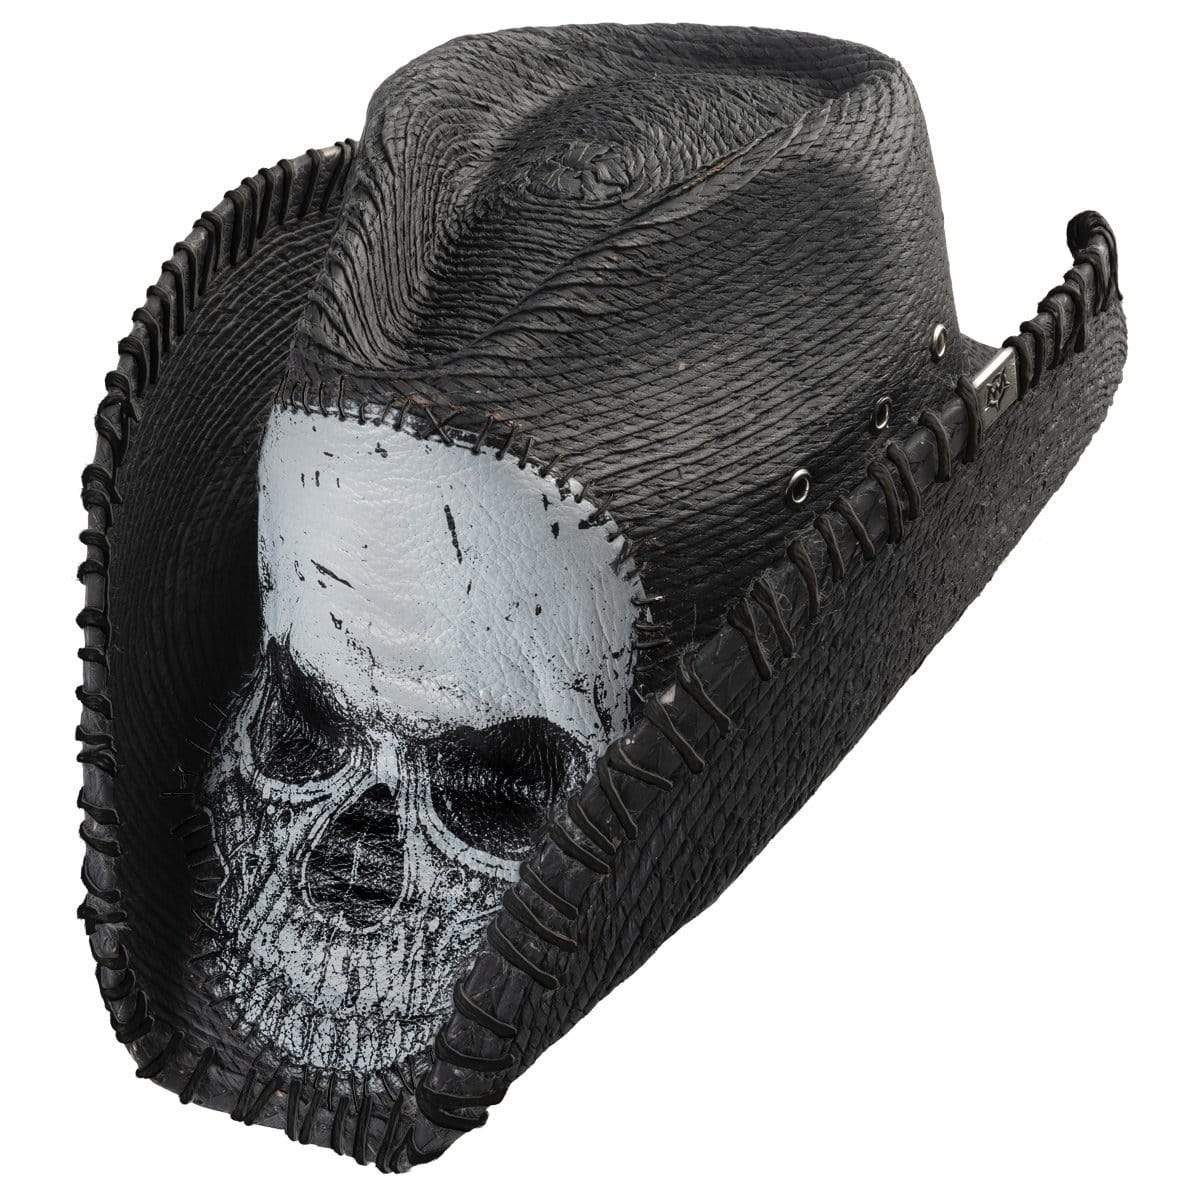 Custom Chop Shop Accessory Wornstar Custom Rocker Hat - Black Stitched Skull